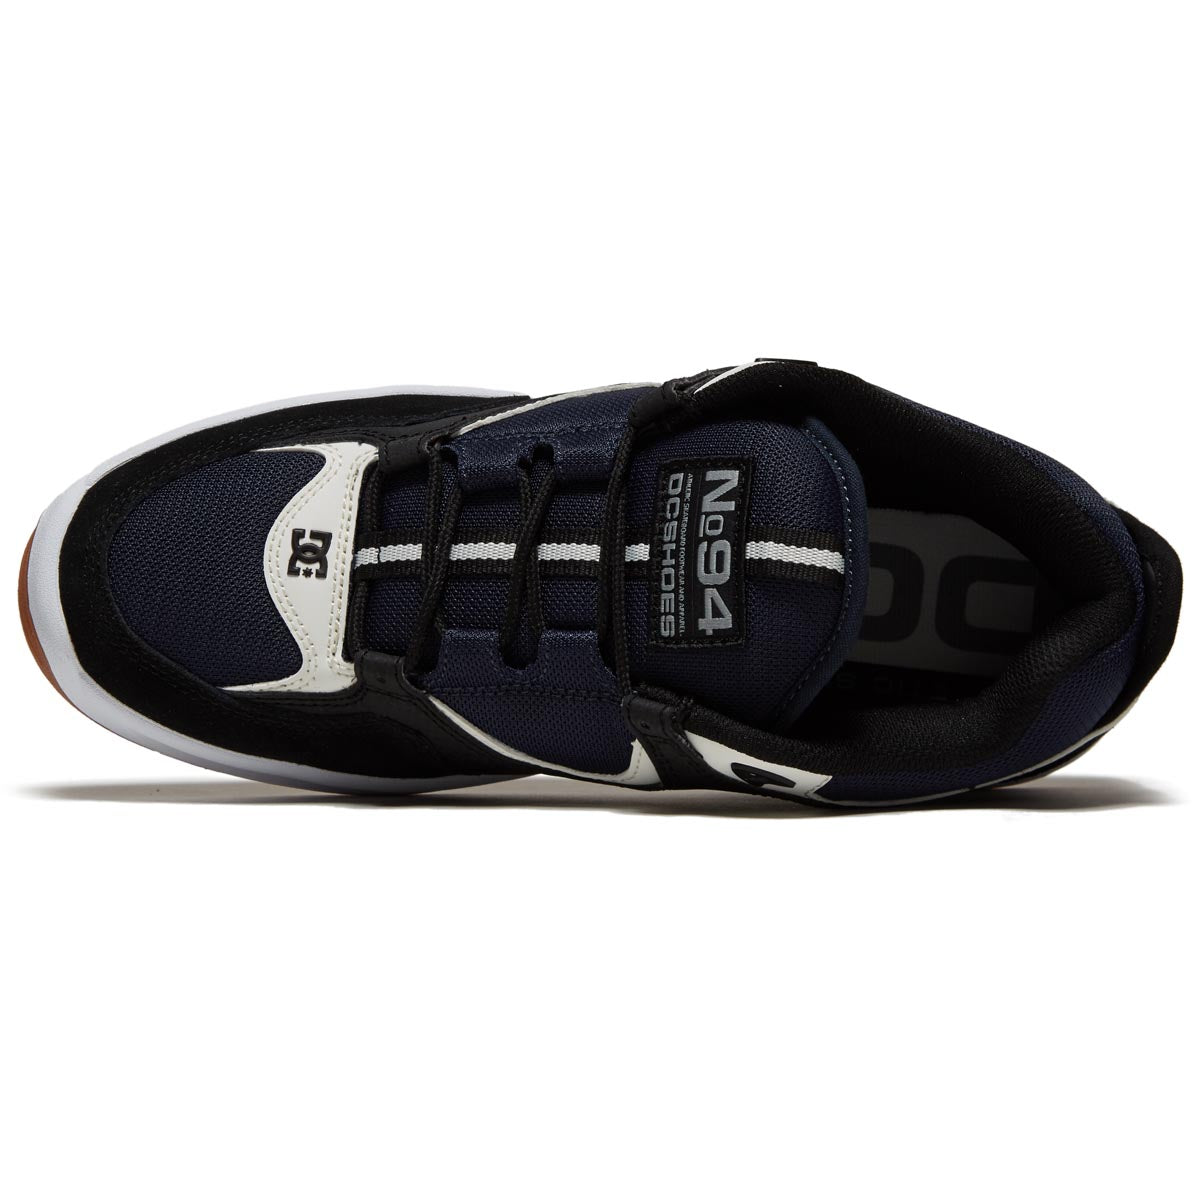 DC Kalynx Zero Shoes - Black/Black/Blue image 3